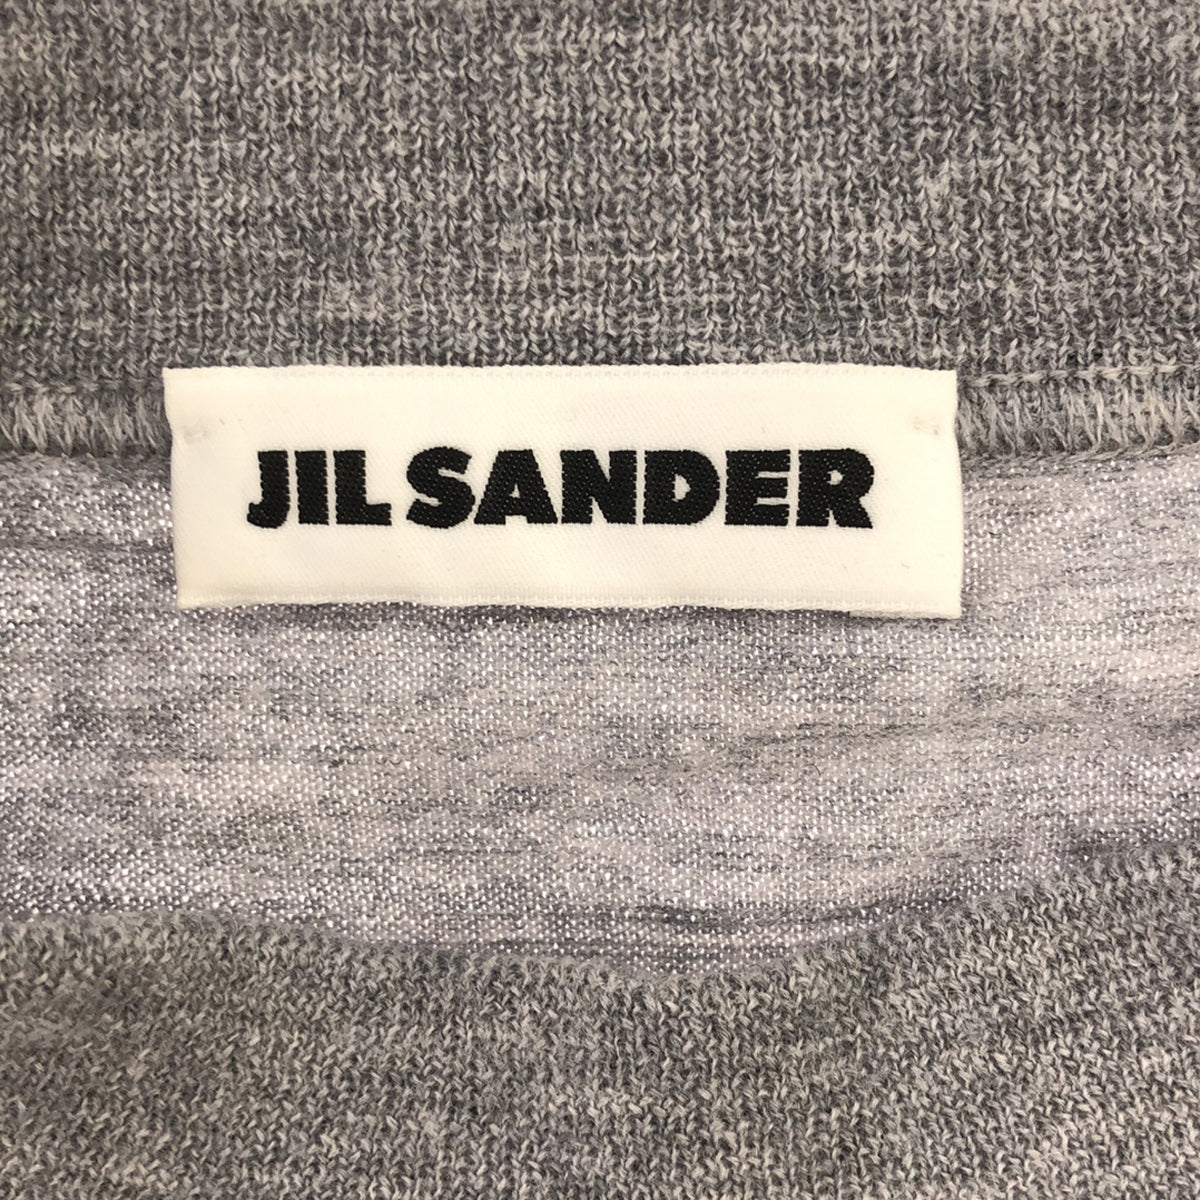 JIL SANDER / ジルサンダー | ハイネック サマーニット プルオーバー カットソー Tシャツ | 48 | メンズ